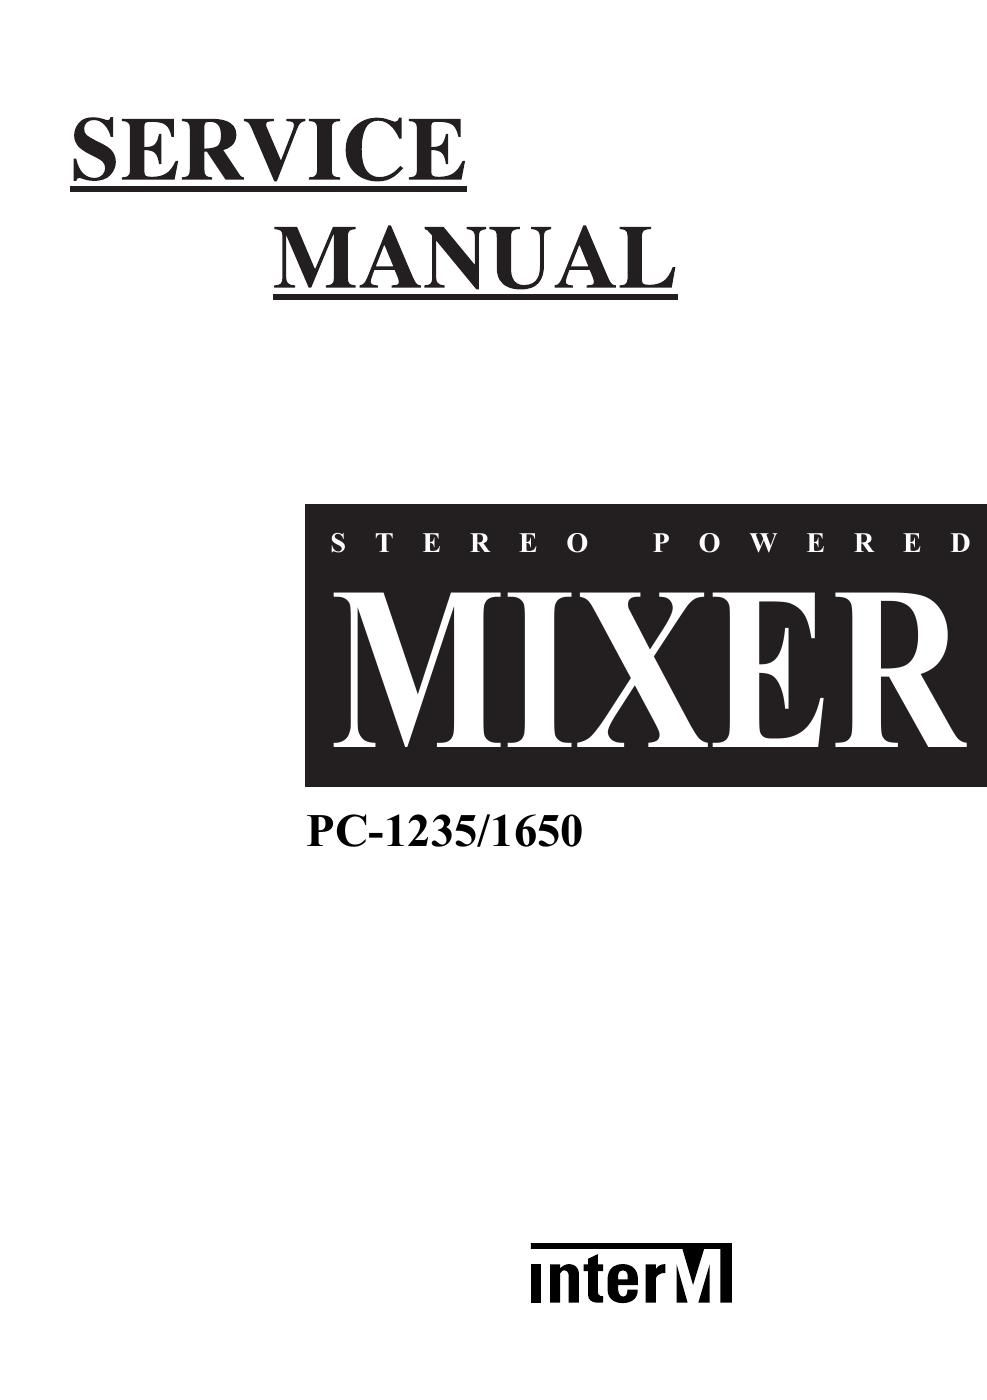 interm pc 1235 1650 mixer